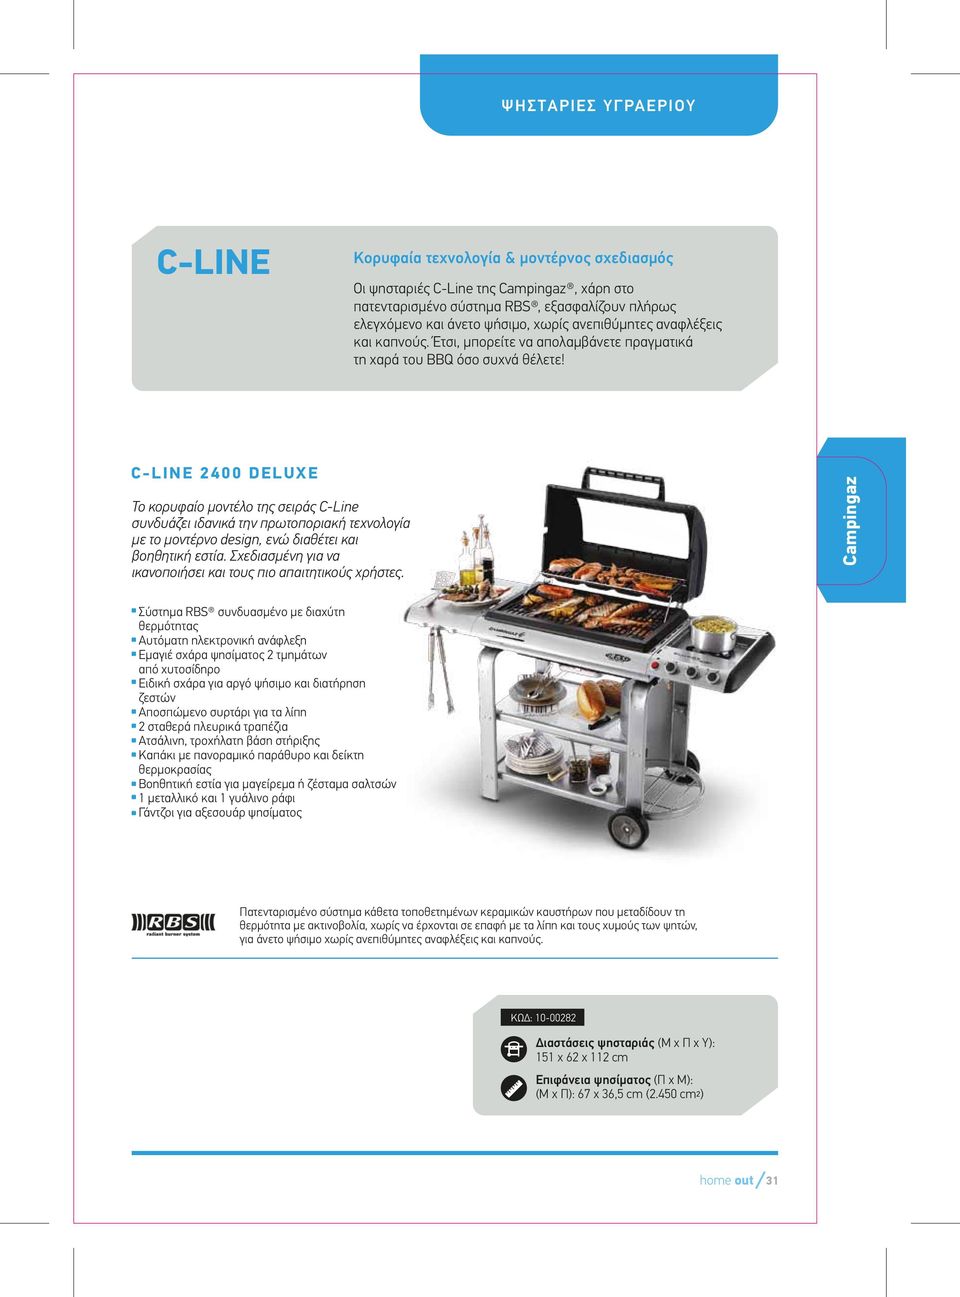 C-LINE 2400 DELUXE Το κορυφαίο µοντέλο της σειράς C-Line συνδυάζει ιδανικά την πρωτοποριακή τεχνολογία µε τo µοντέρνο design, ενώ διαθέτει και βoηθητική εστία.